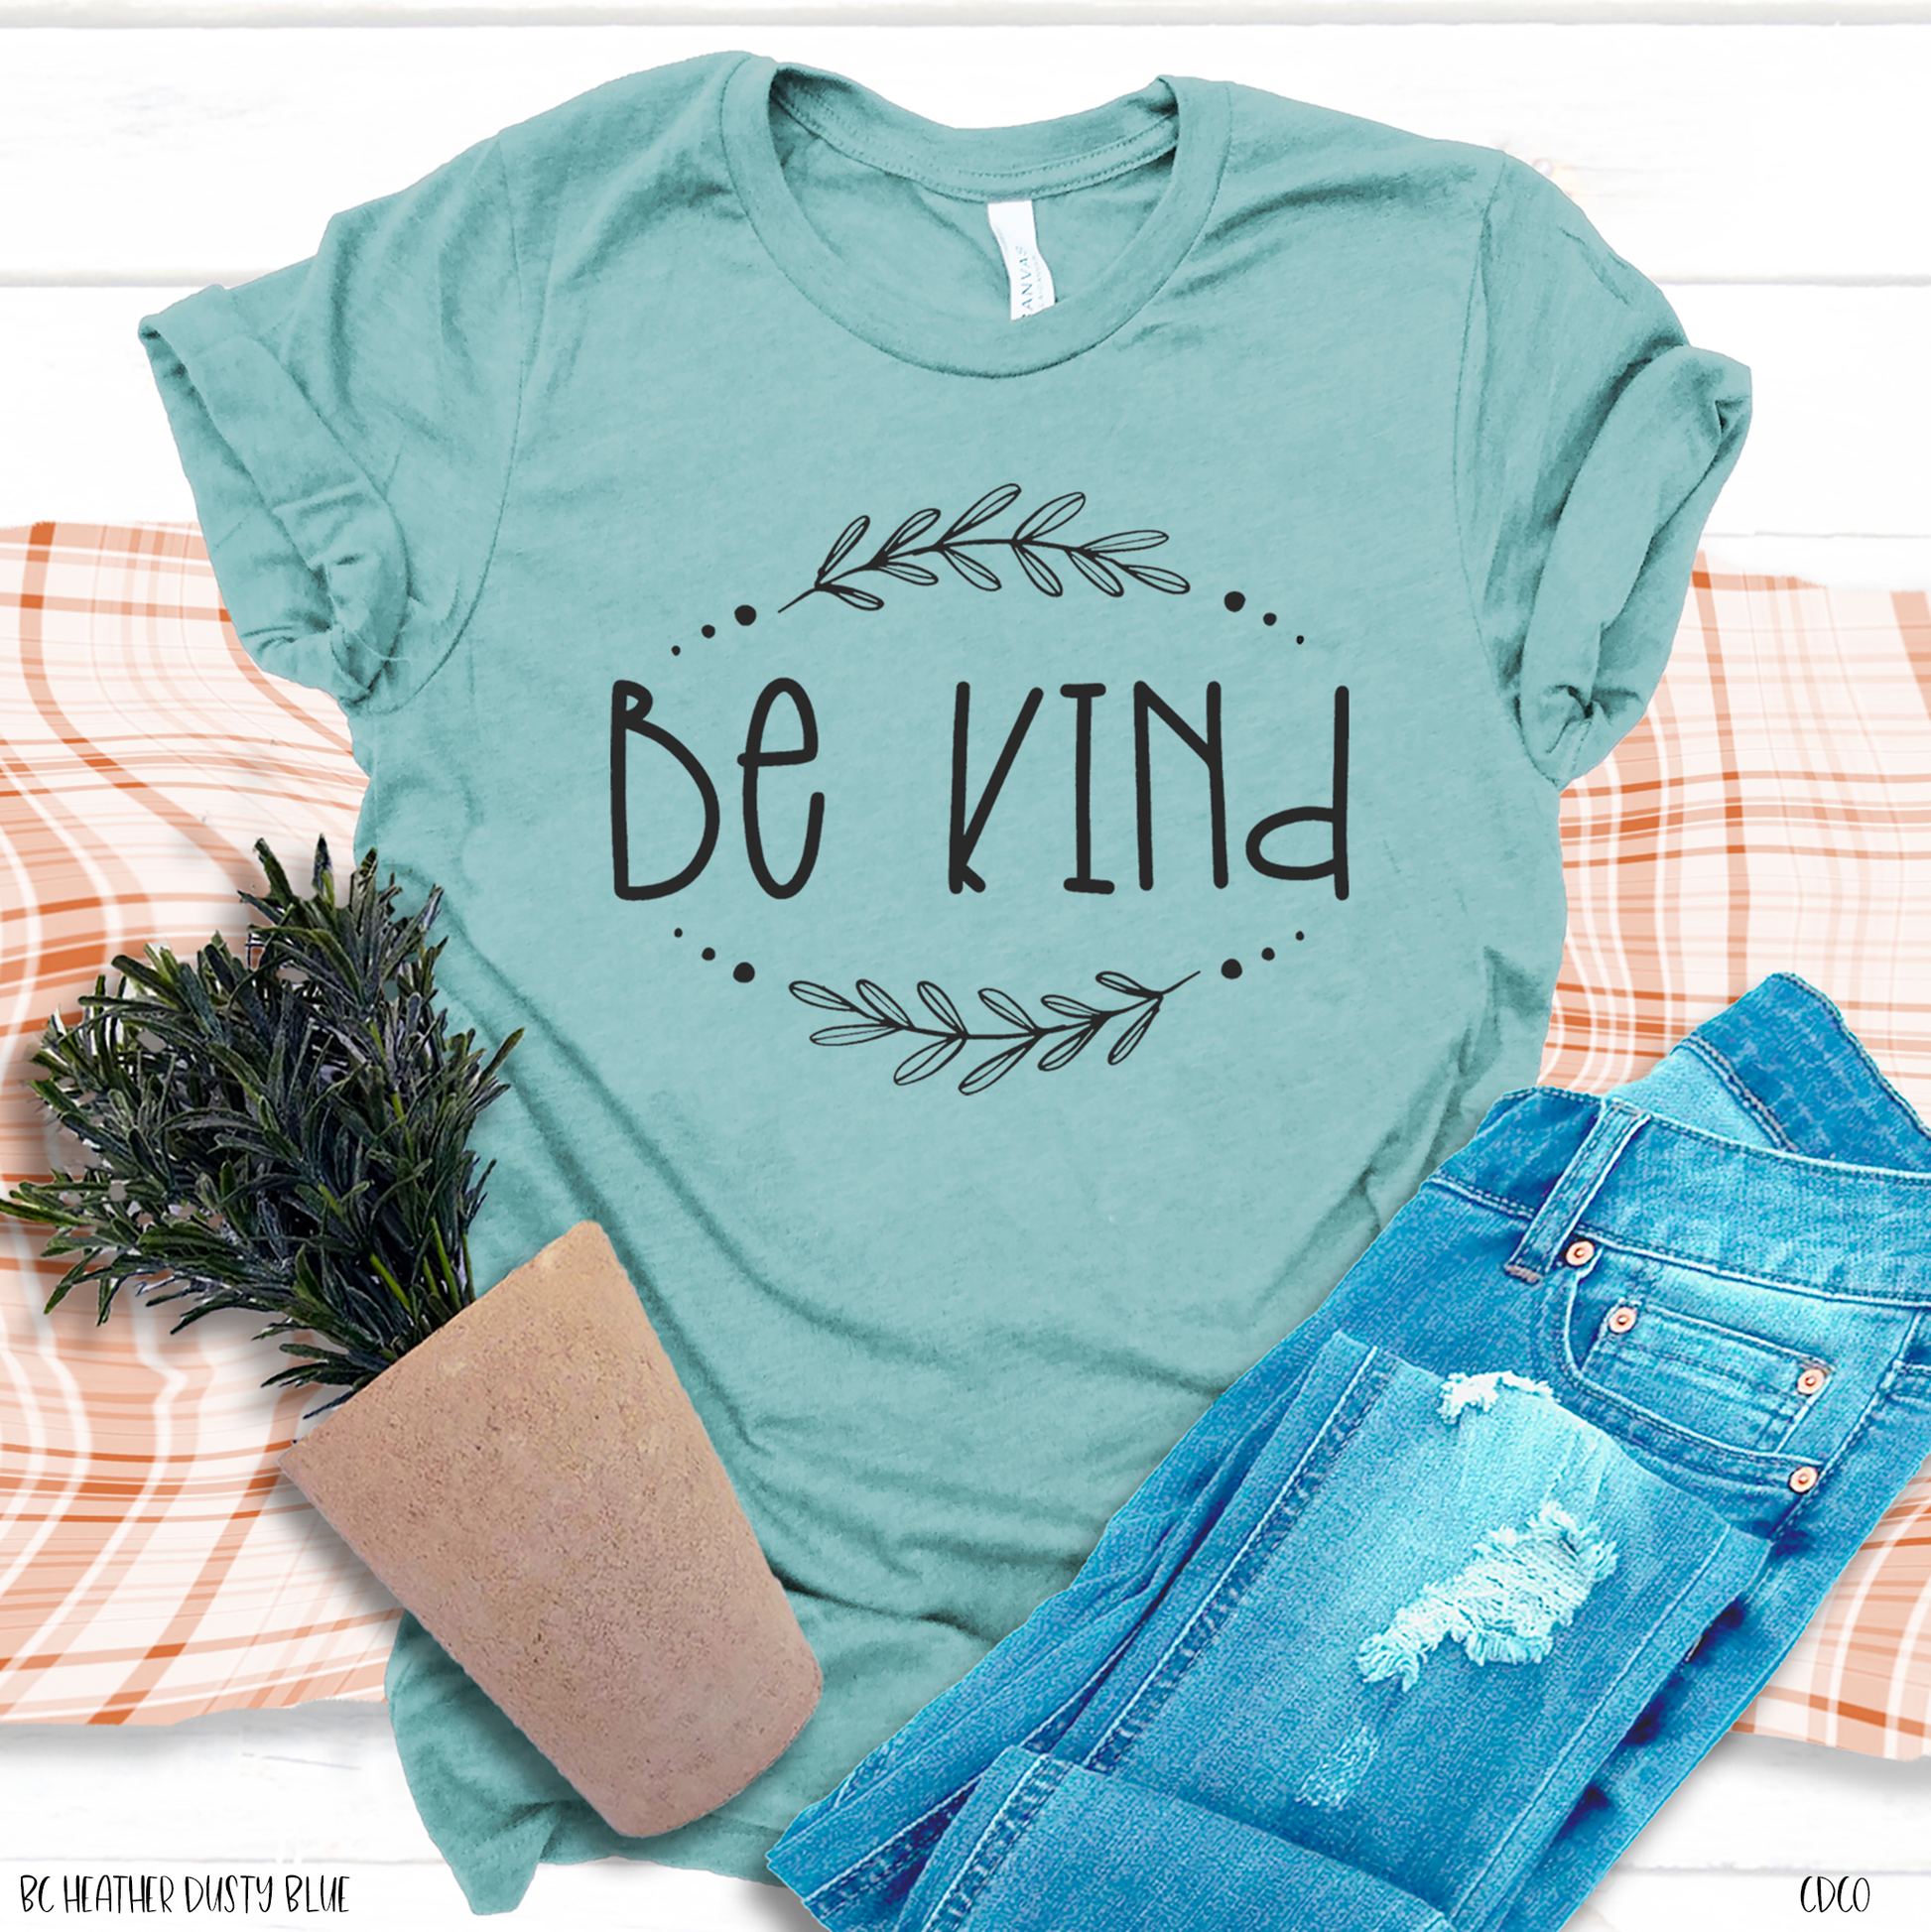 Be Kind (325°) - Chase Design Co.